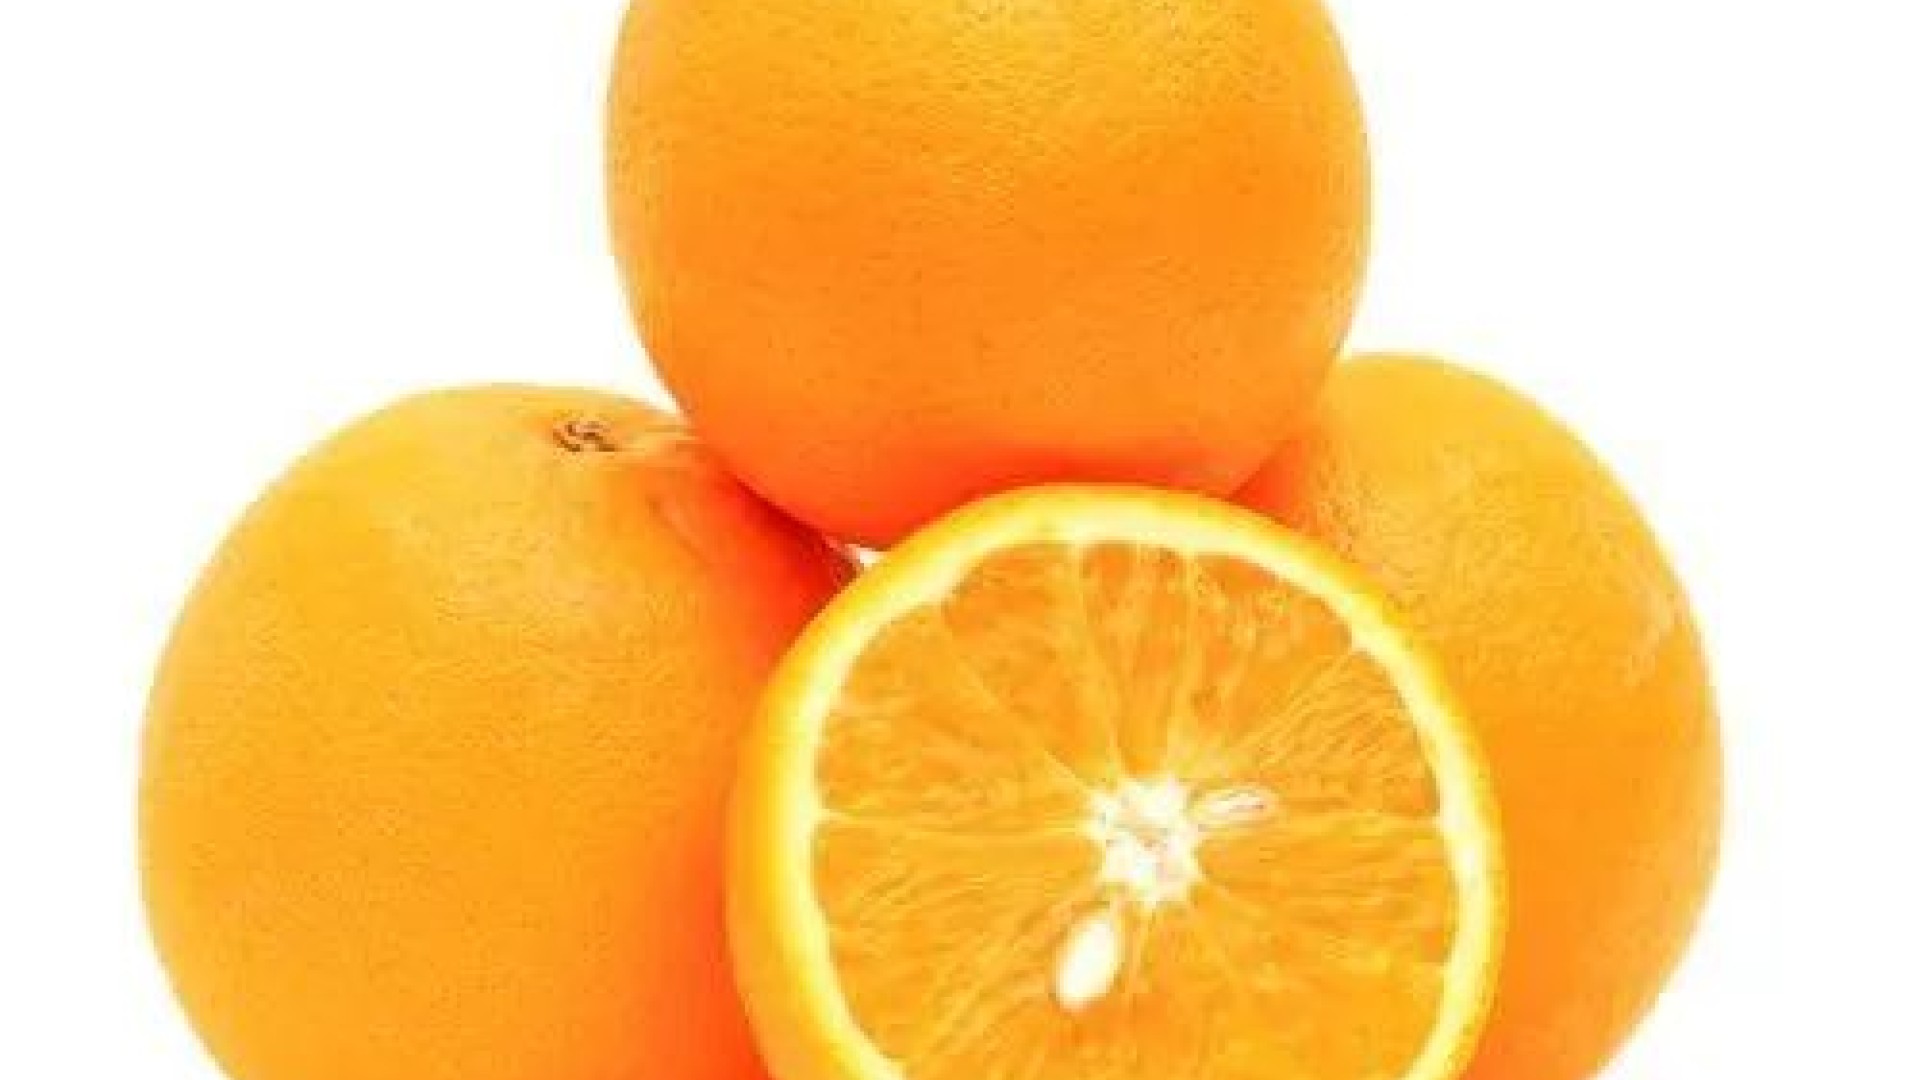 Orange imported